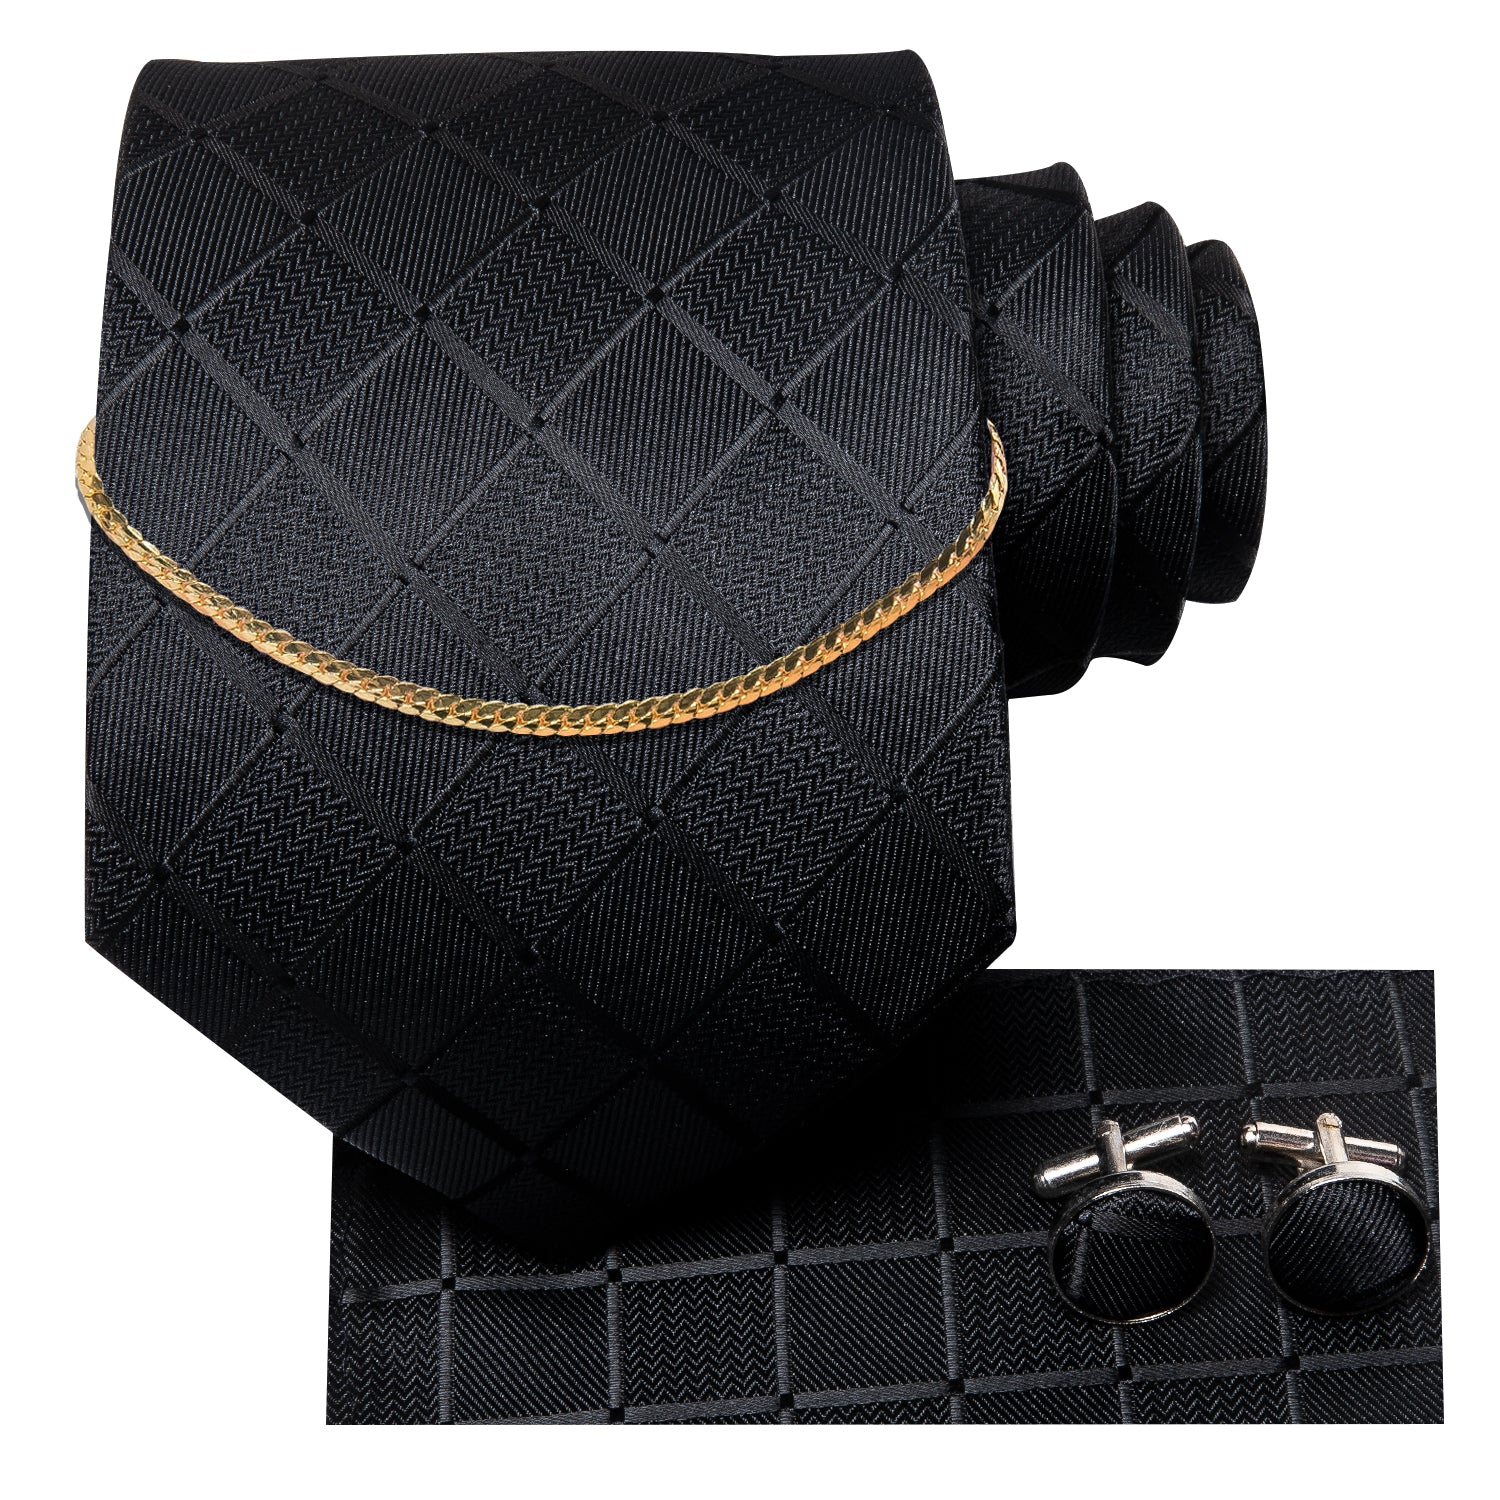 Pure Black Plaid Silk Men's Tie Set Tie Pocket Square Cufflinks Set With Golden Chain